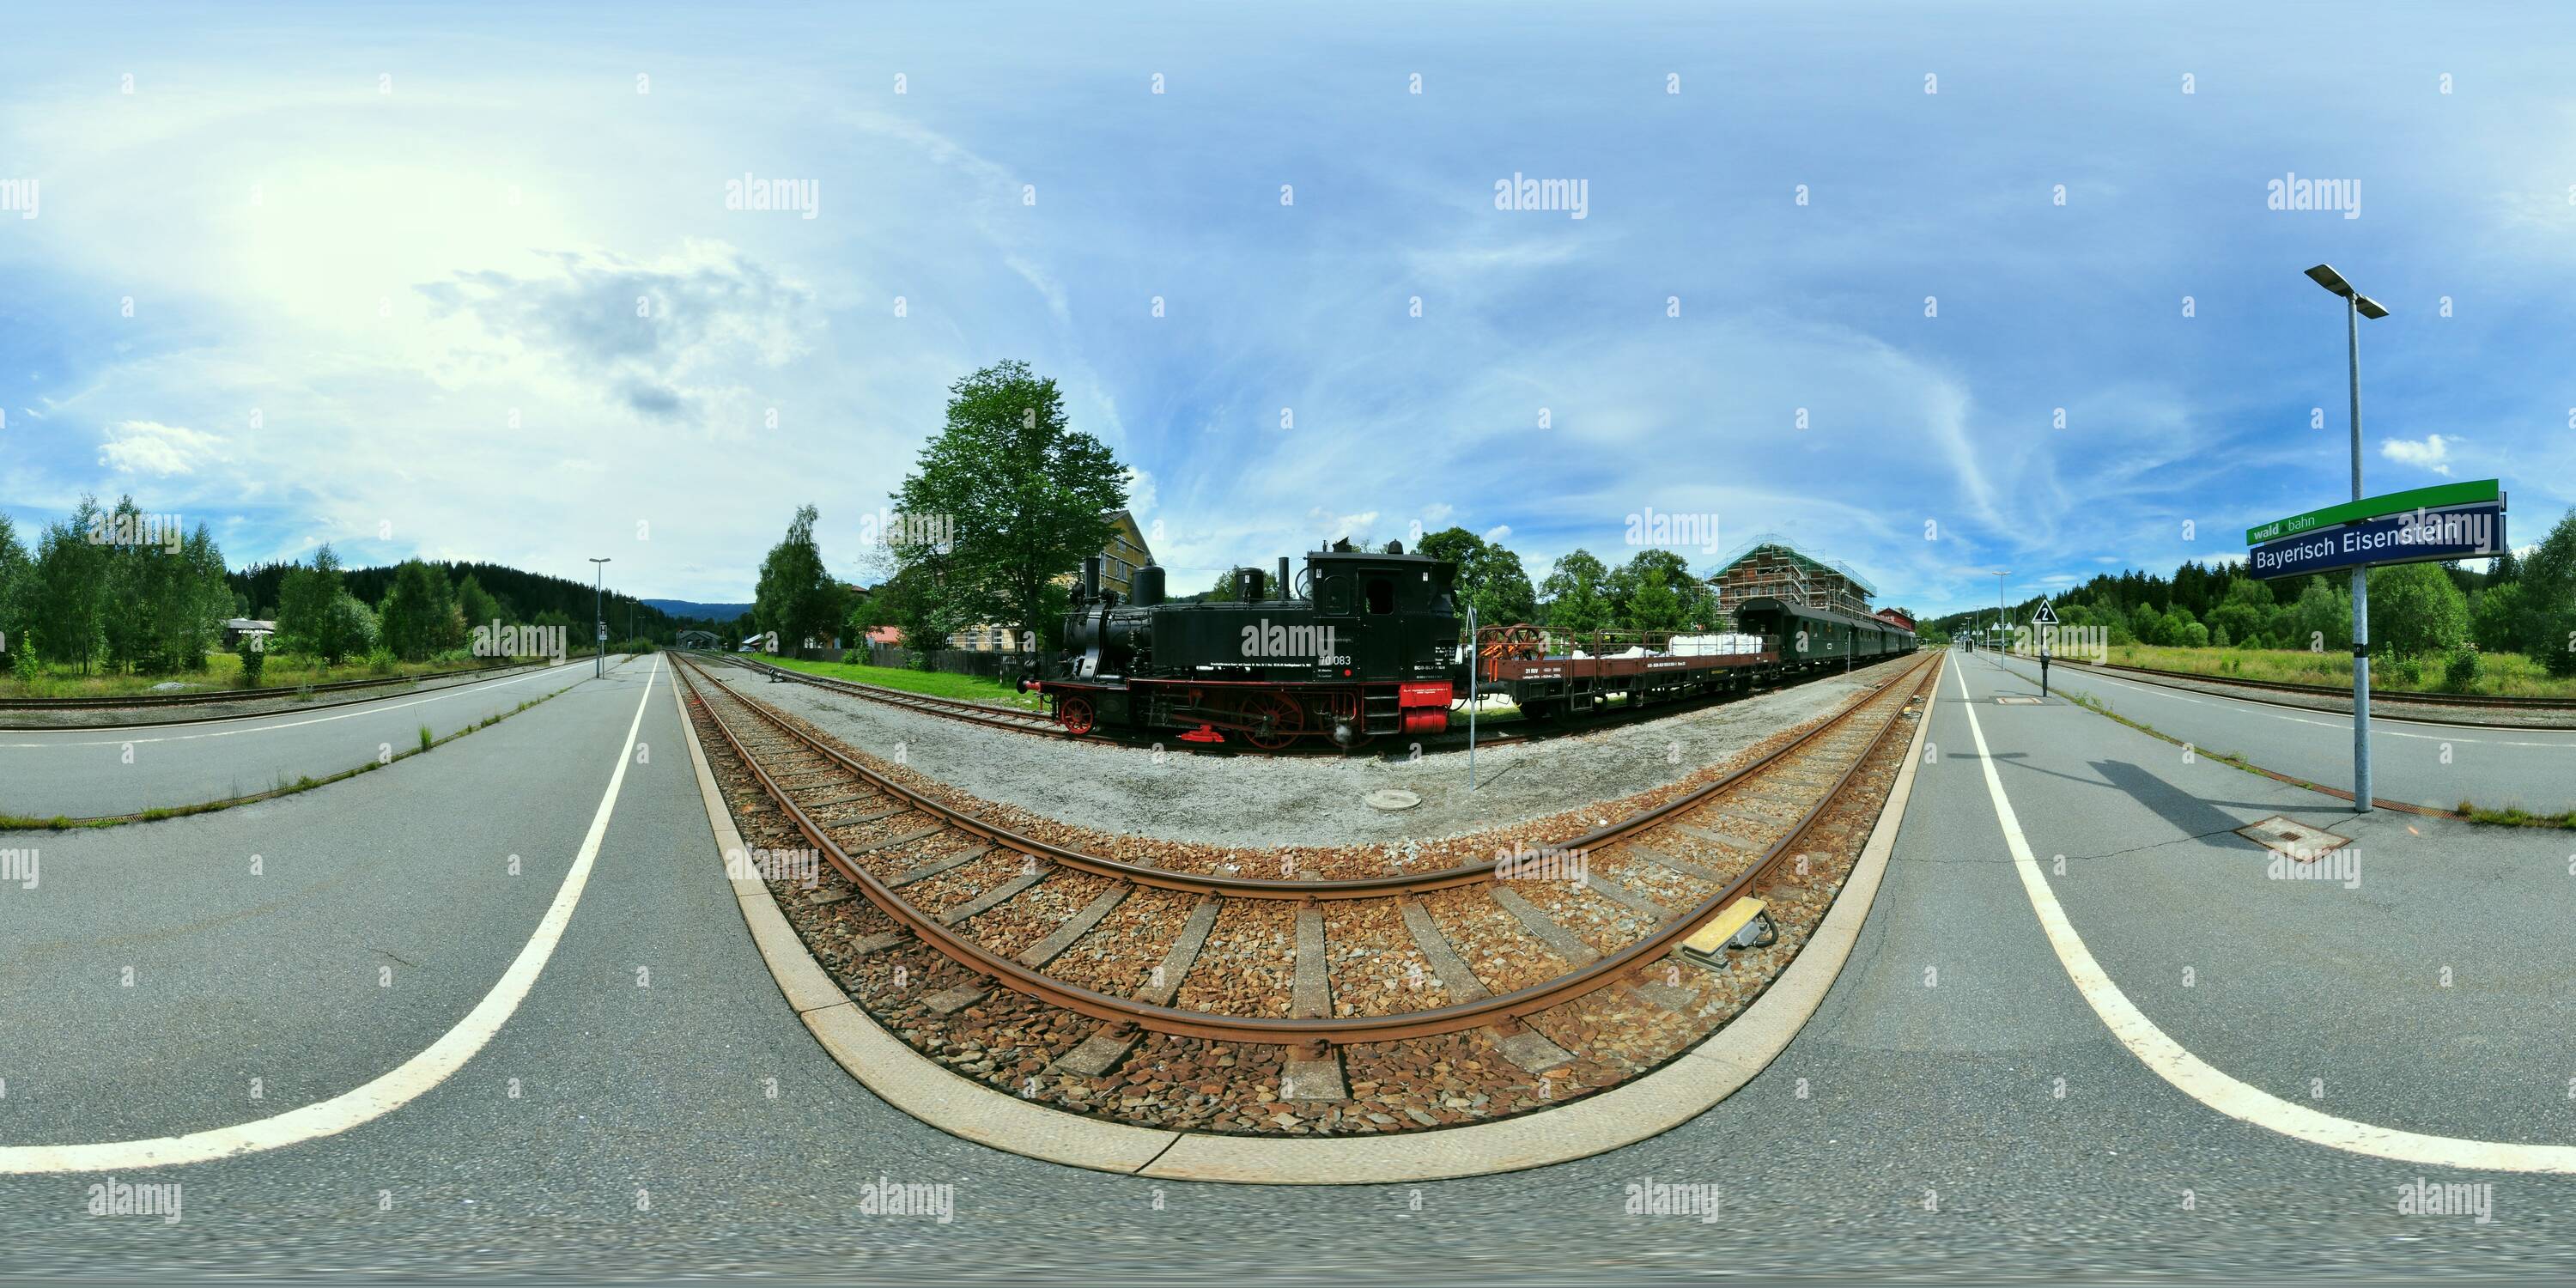 Vista panorámica en 360 grados de Eisenstein - Steamlocomotive Bayrisch y Oldtimer vagones